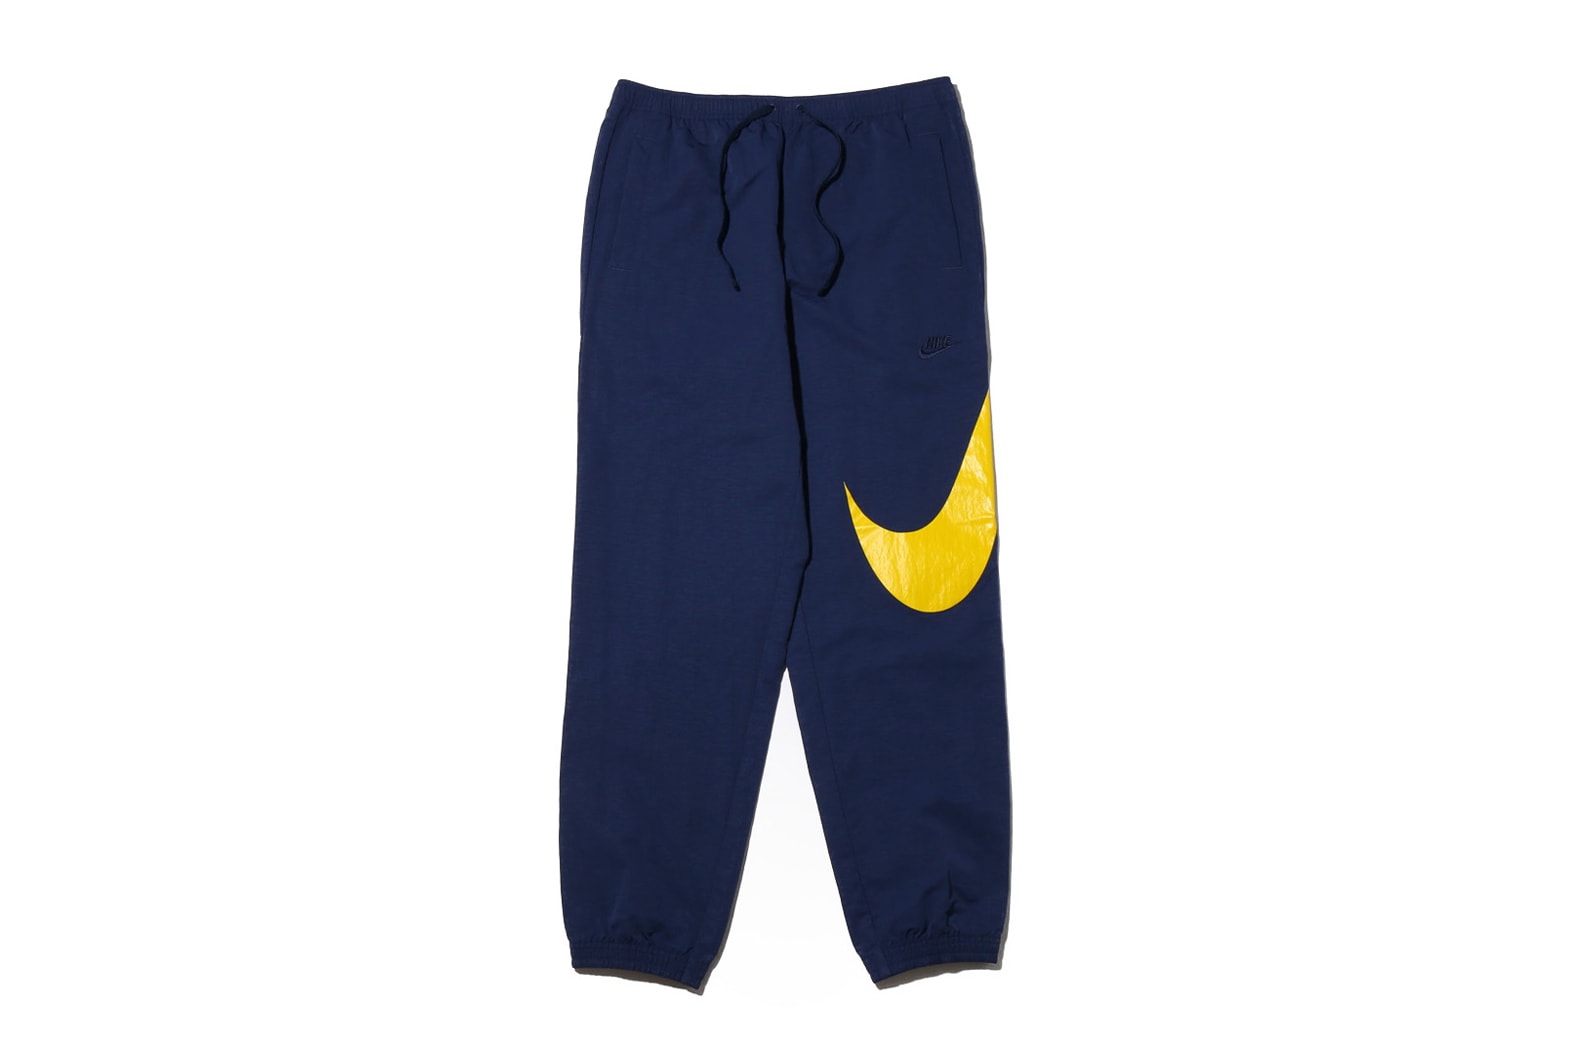 Nike Sportswear Big Swoosh Logo Anorak Jacket Tracksuit Pants Yellow Vivid Sulfur Blue Navy White Price Release